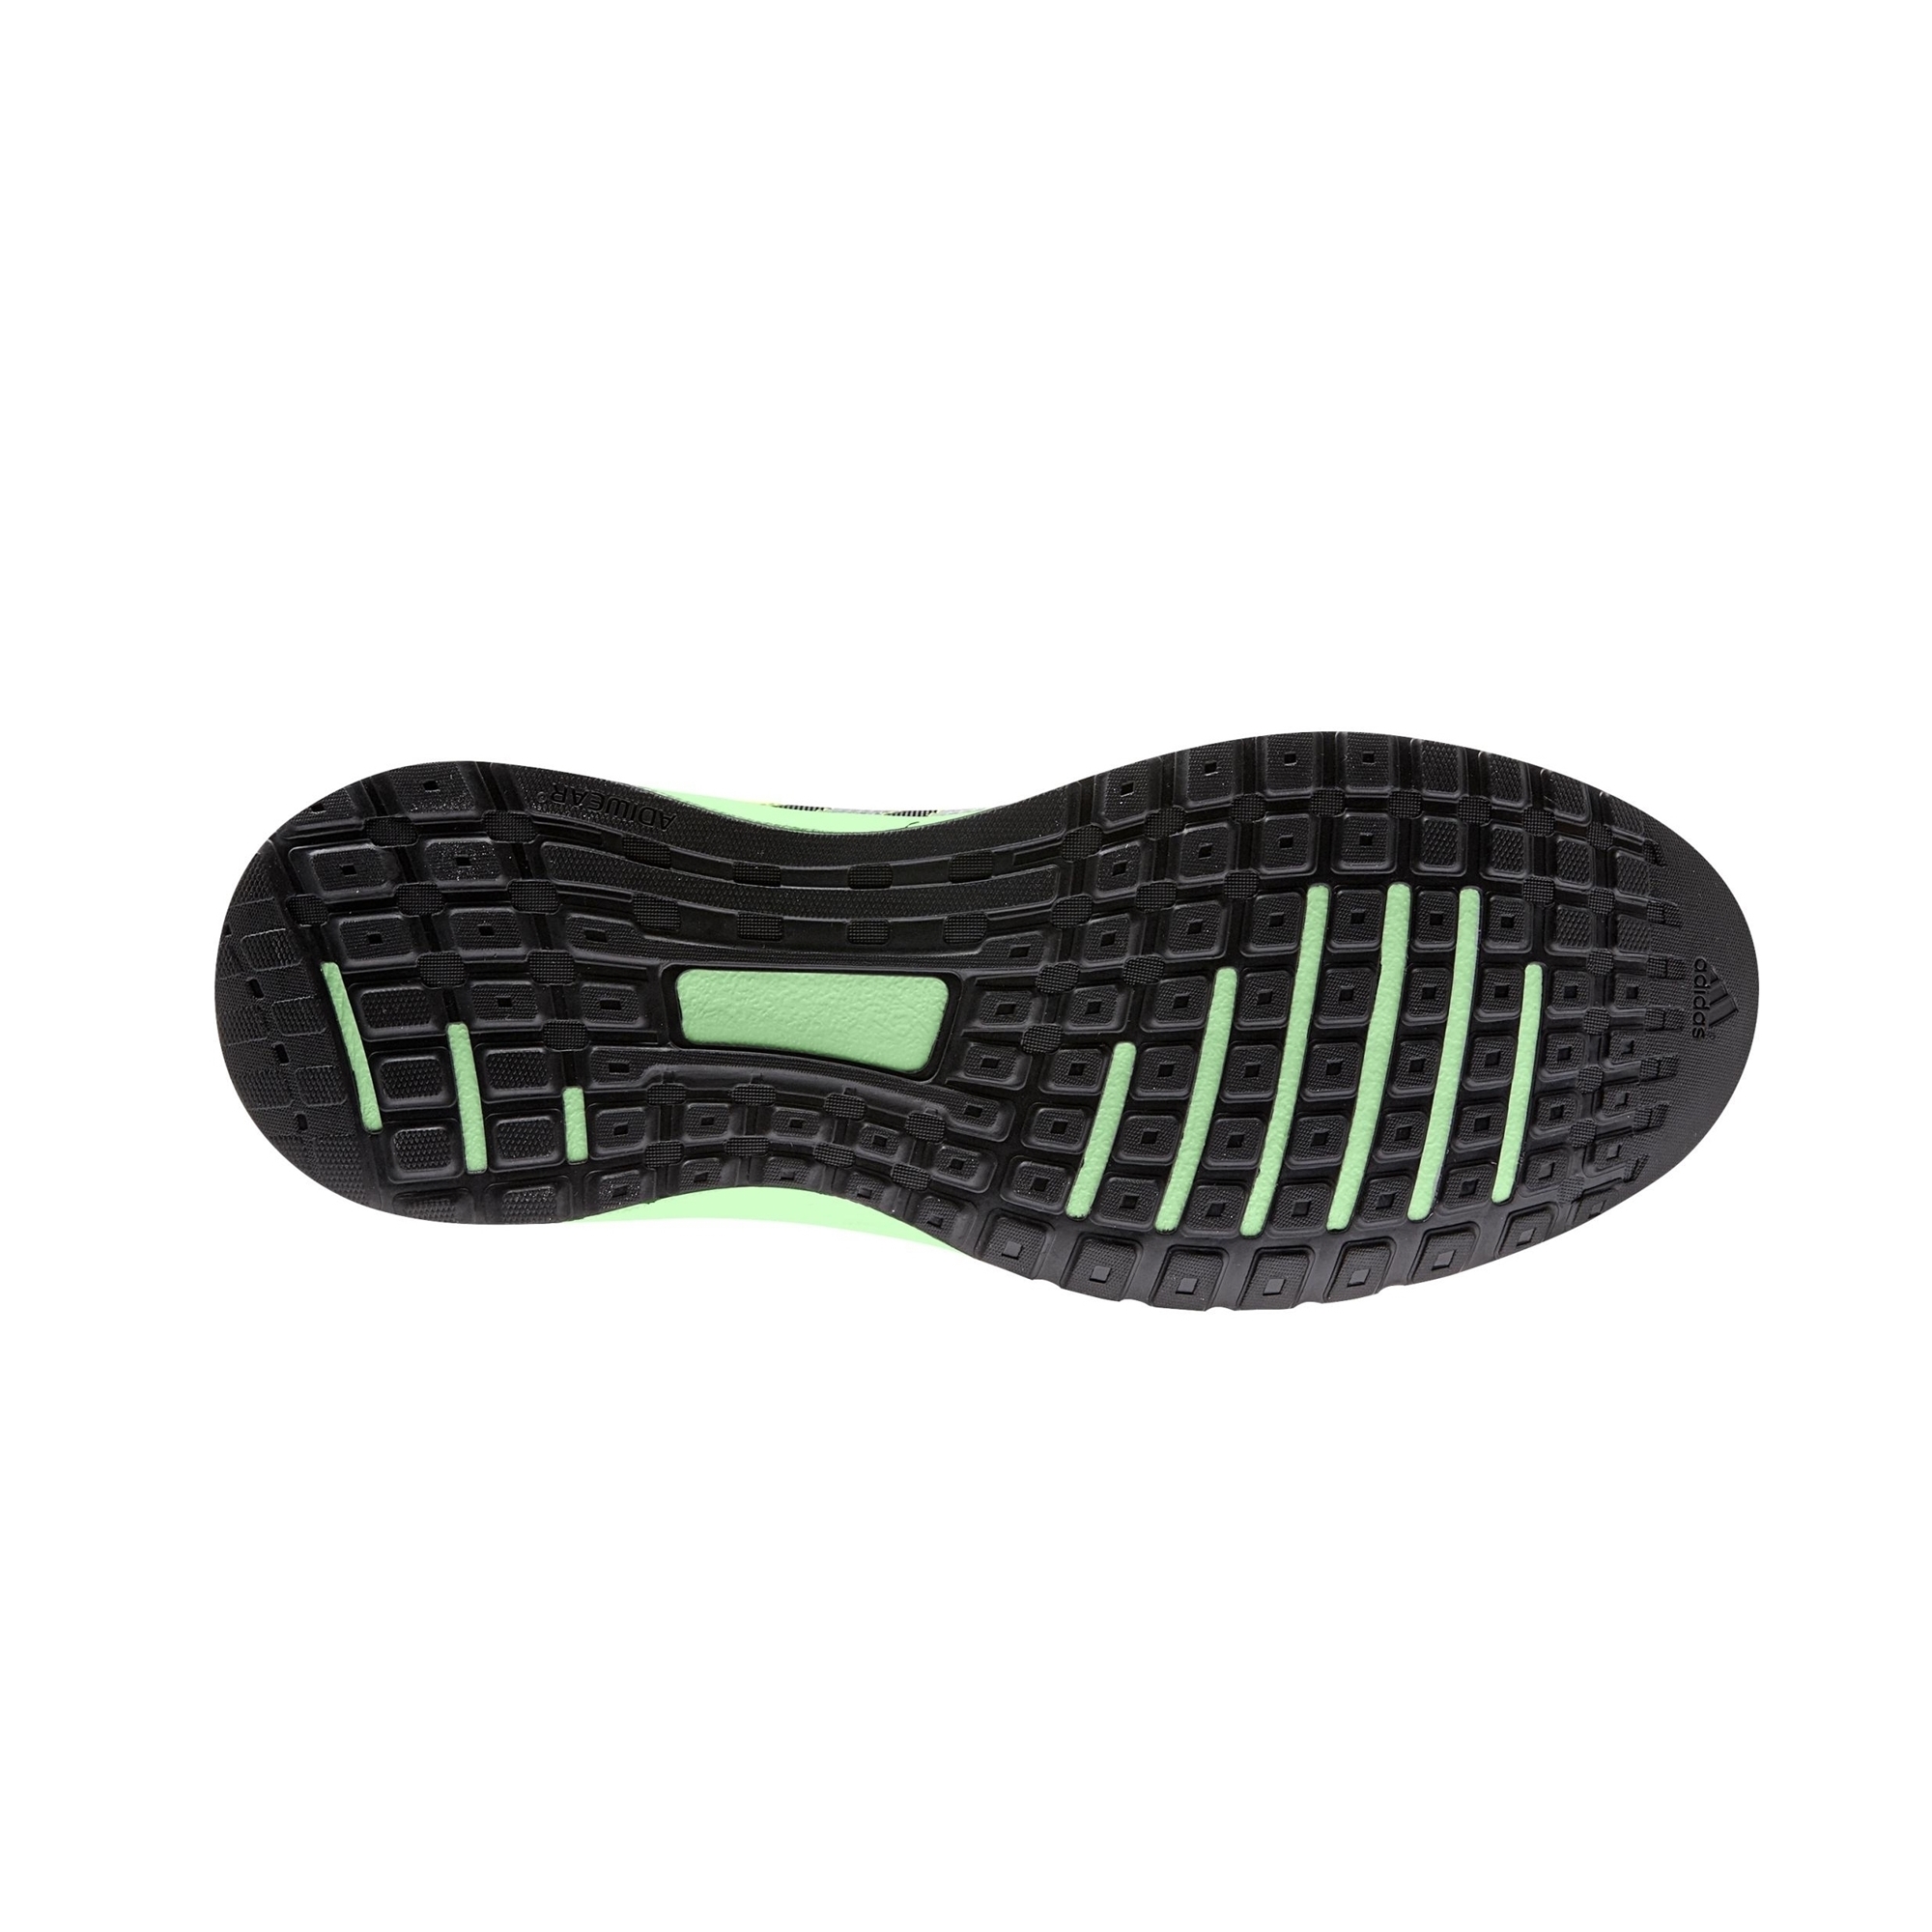 Adidas Galaxy 2 (negro/verde lima) - manelsanchez.com